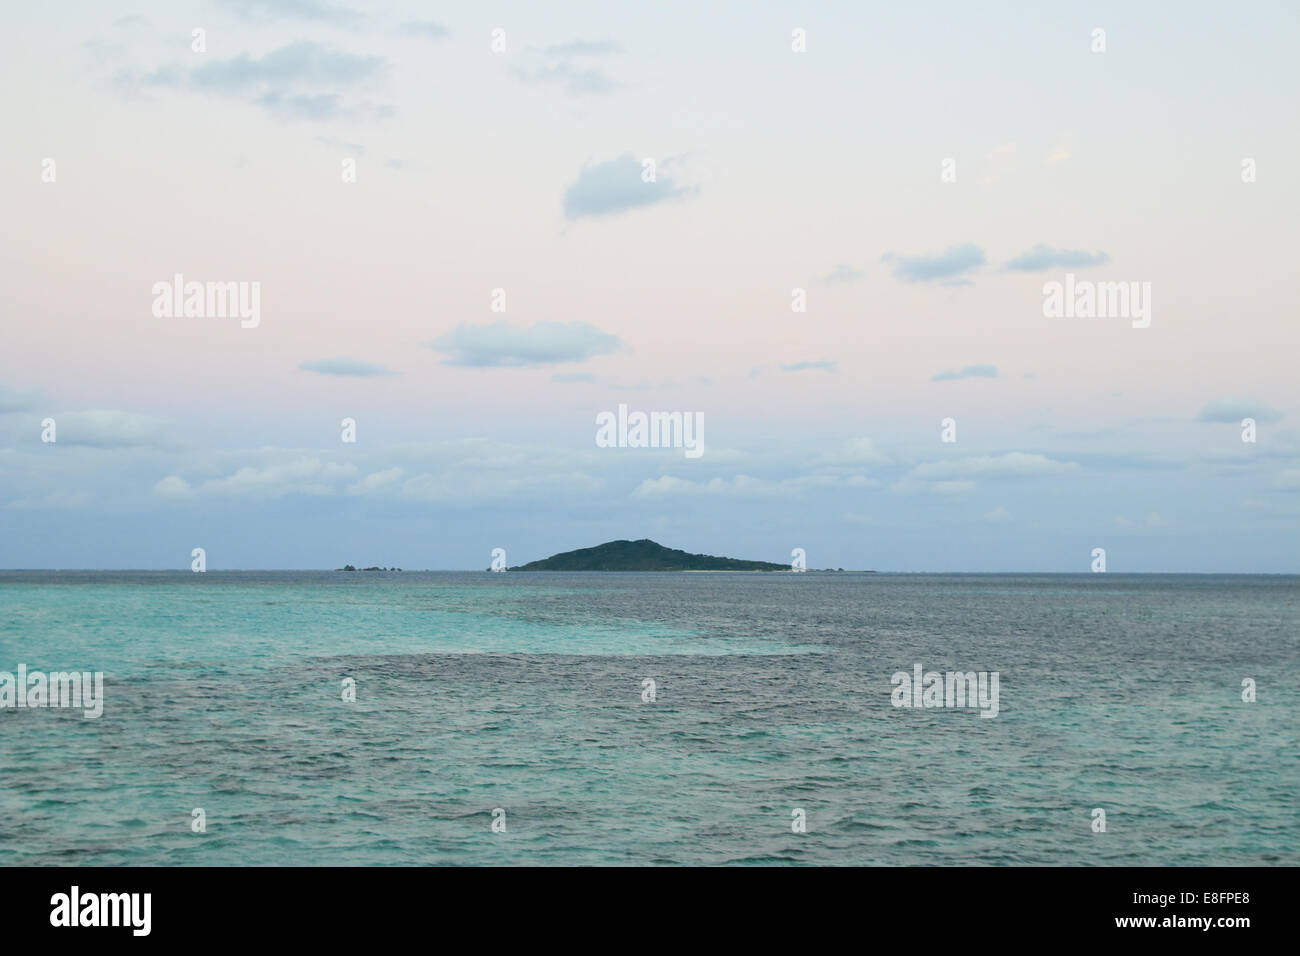 Remote island at sea, Japan Stock Photo